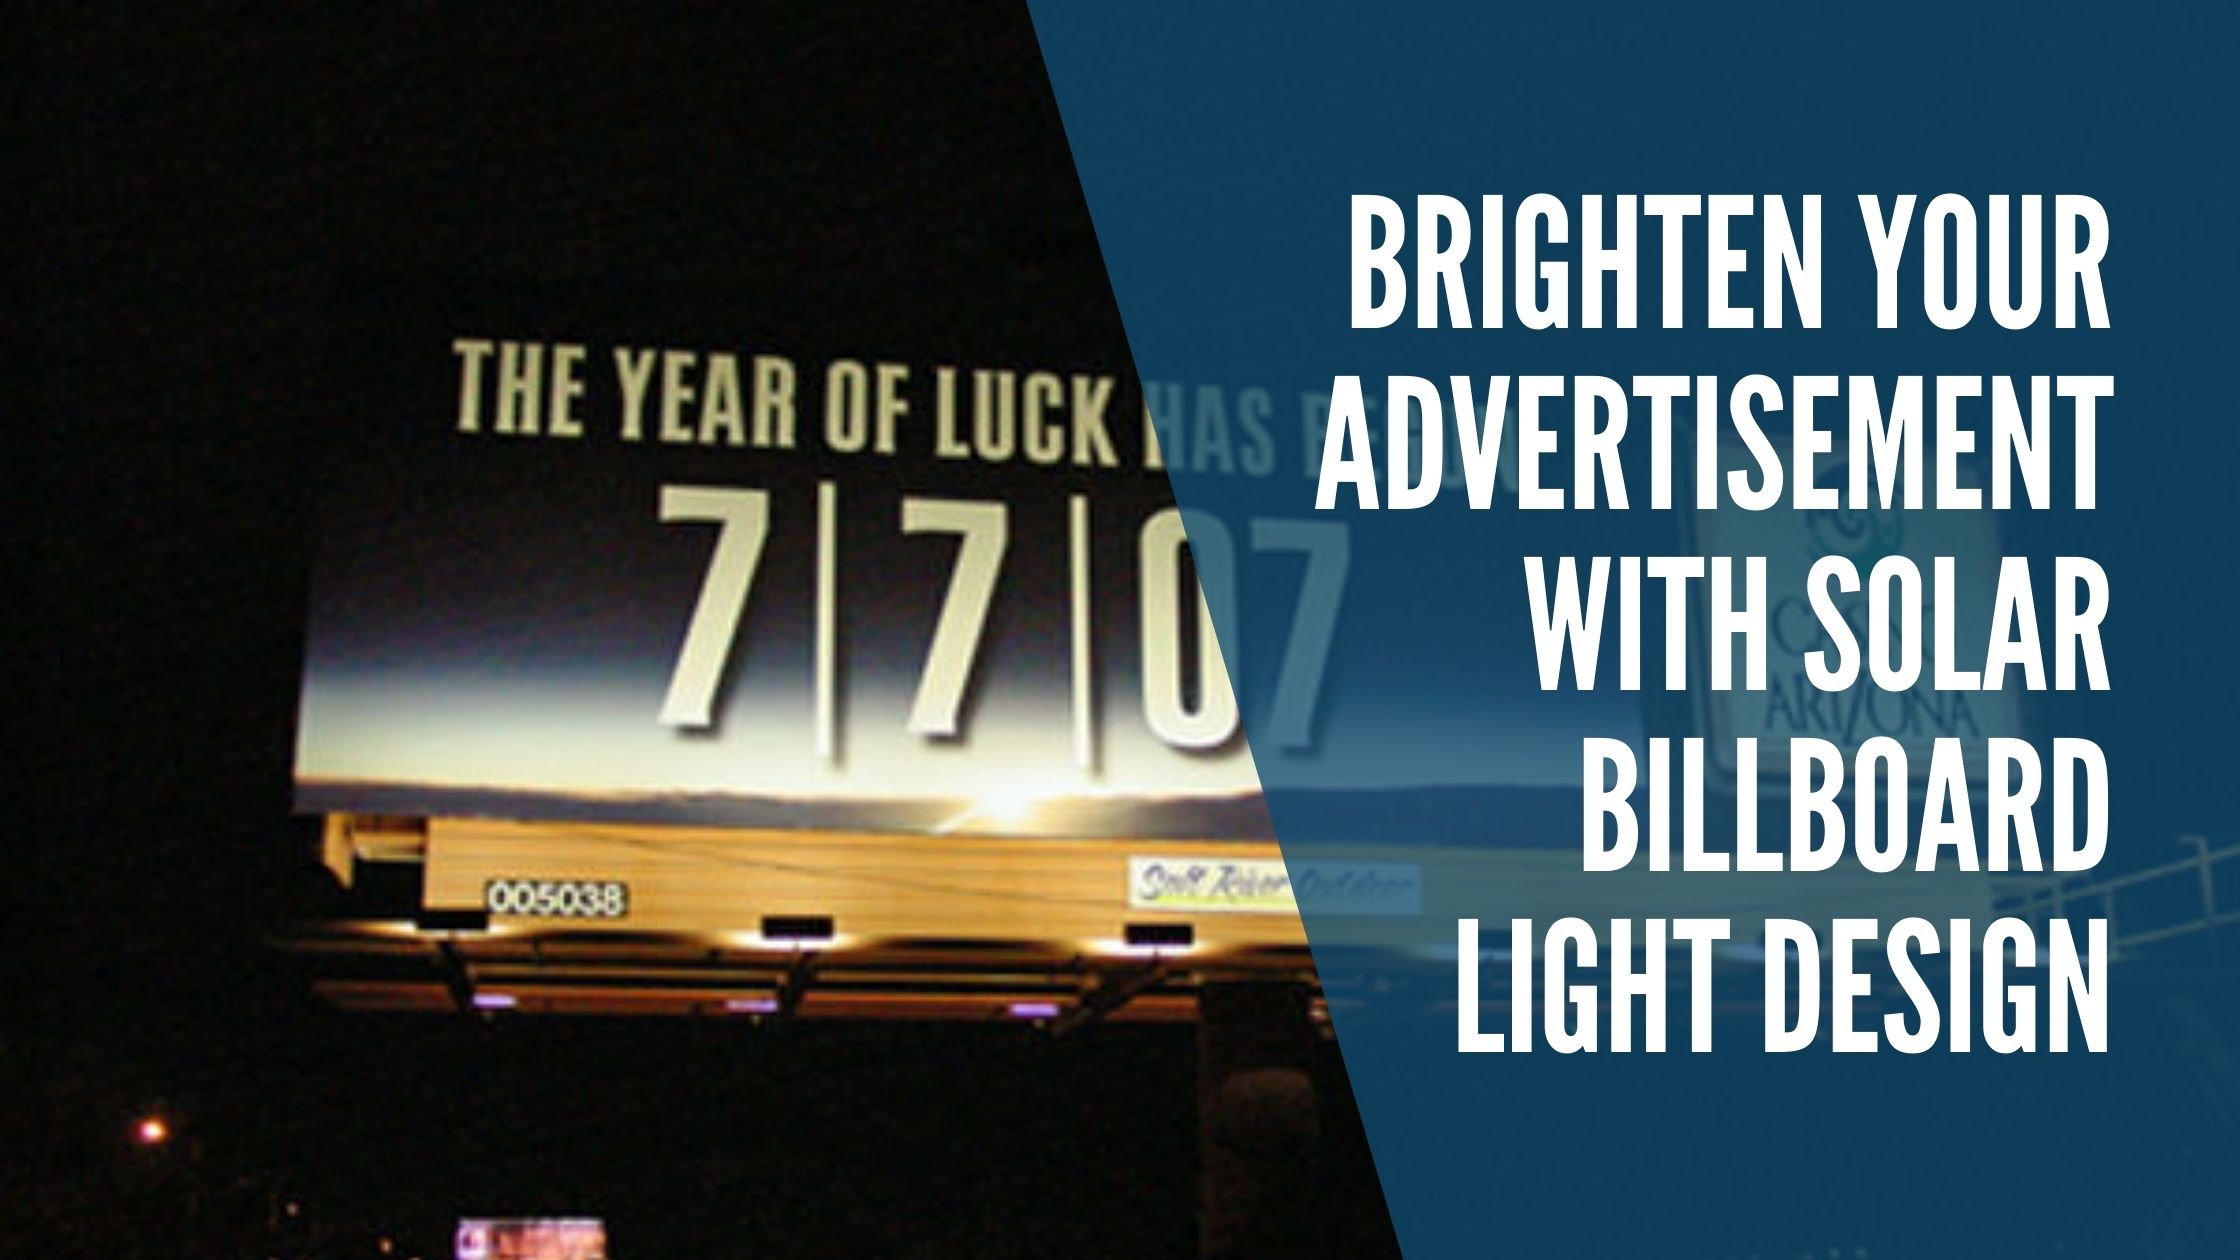 Brighten Your Advertisement with Solar Billboard Light Design